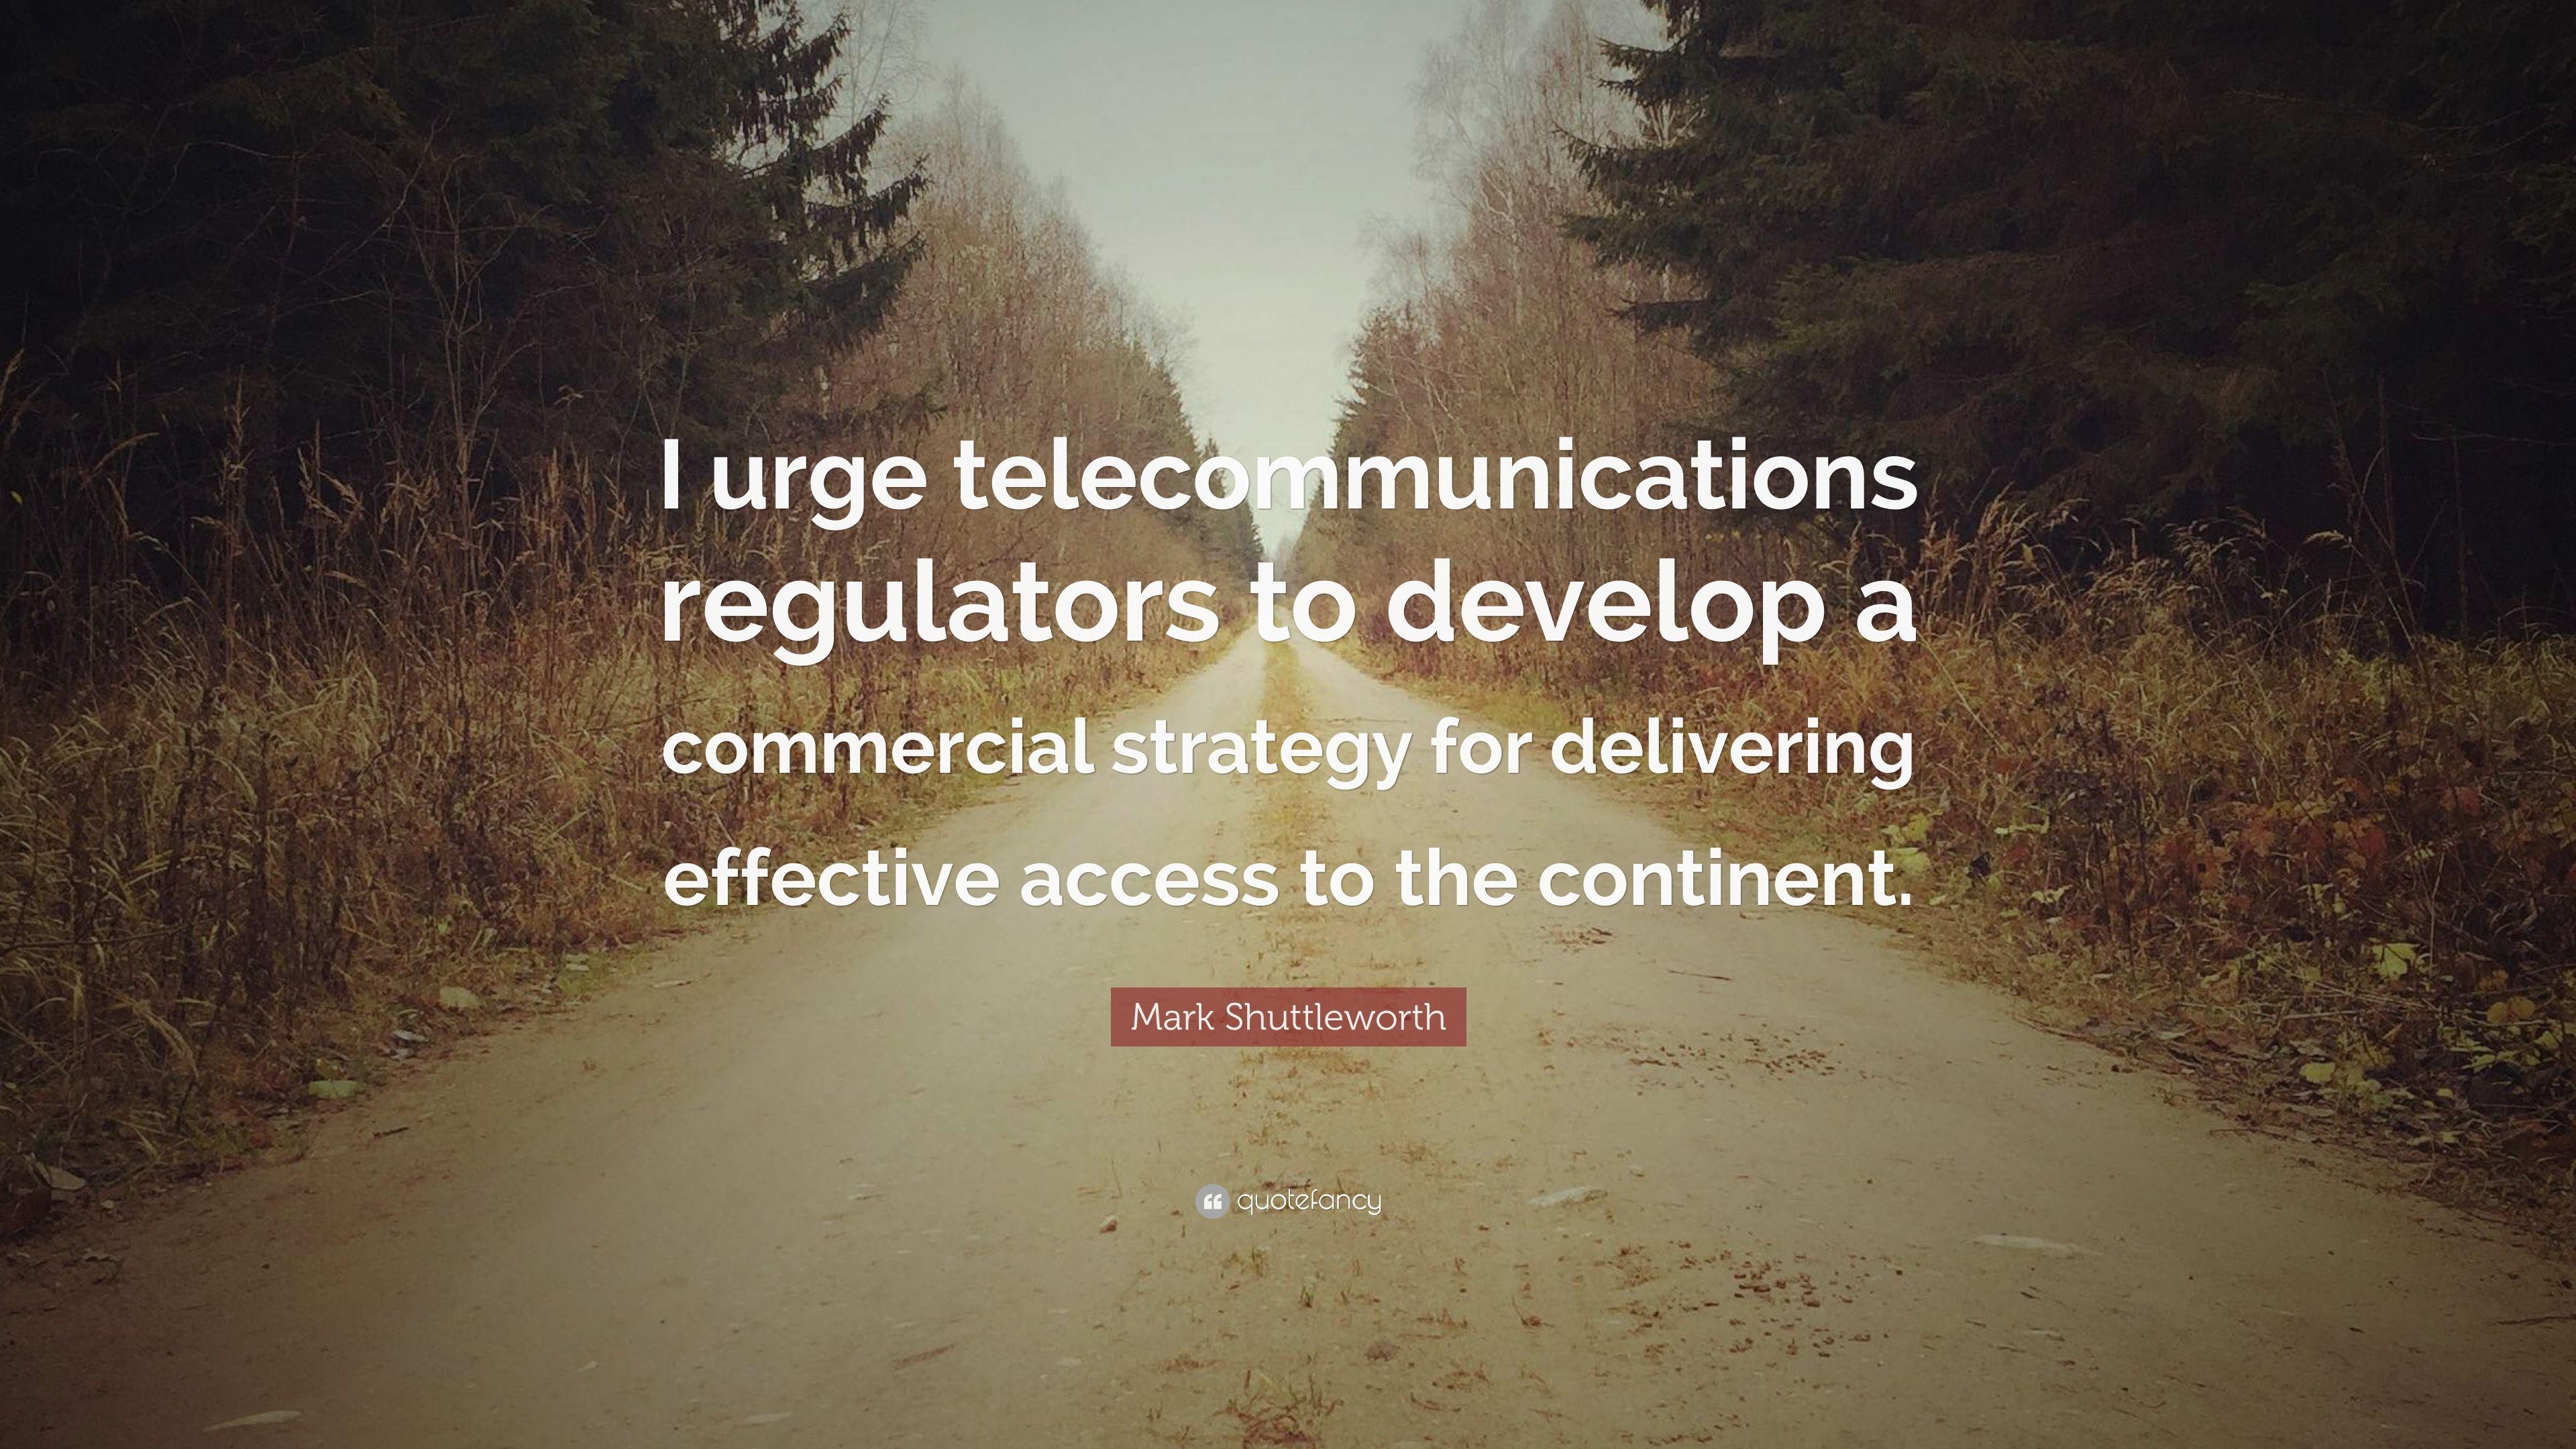 Mark Shuttleworth Quote: “I urge telecommunications regulators to